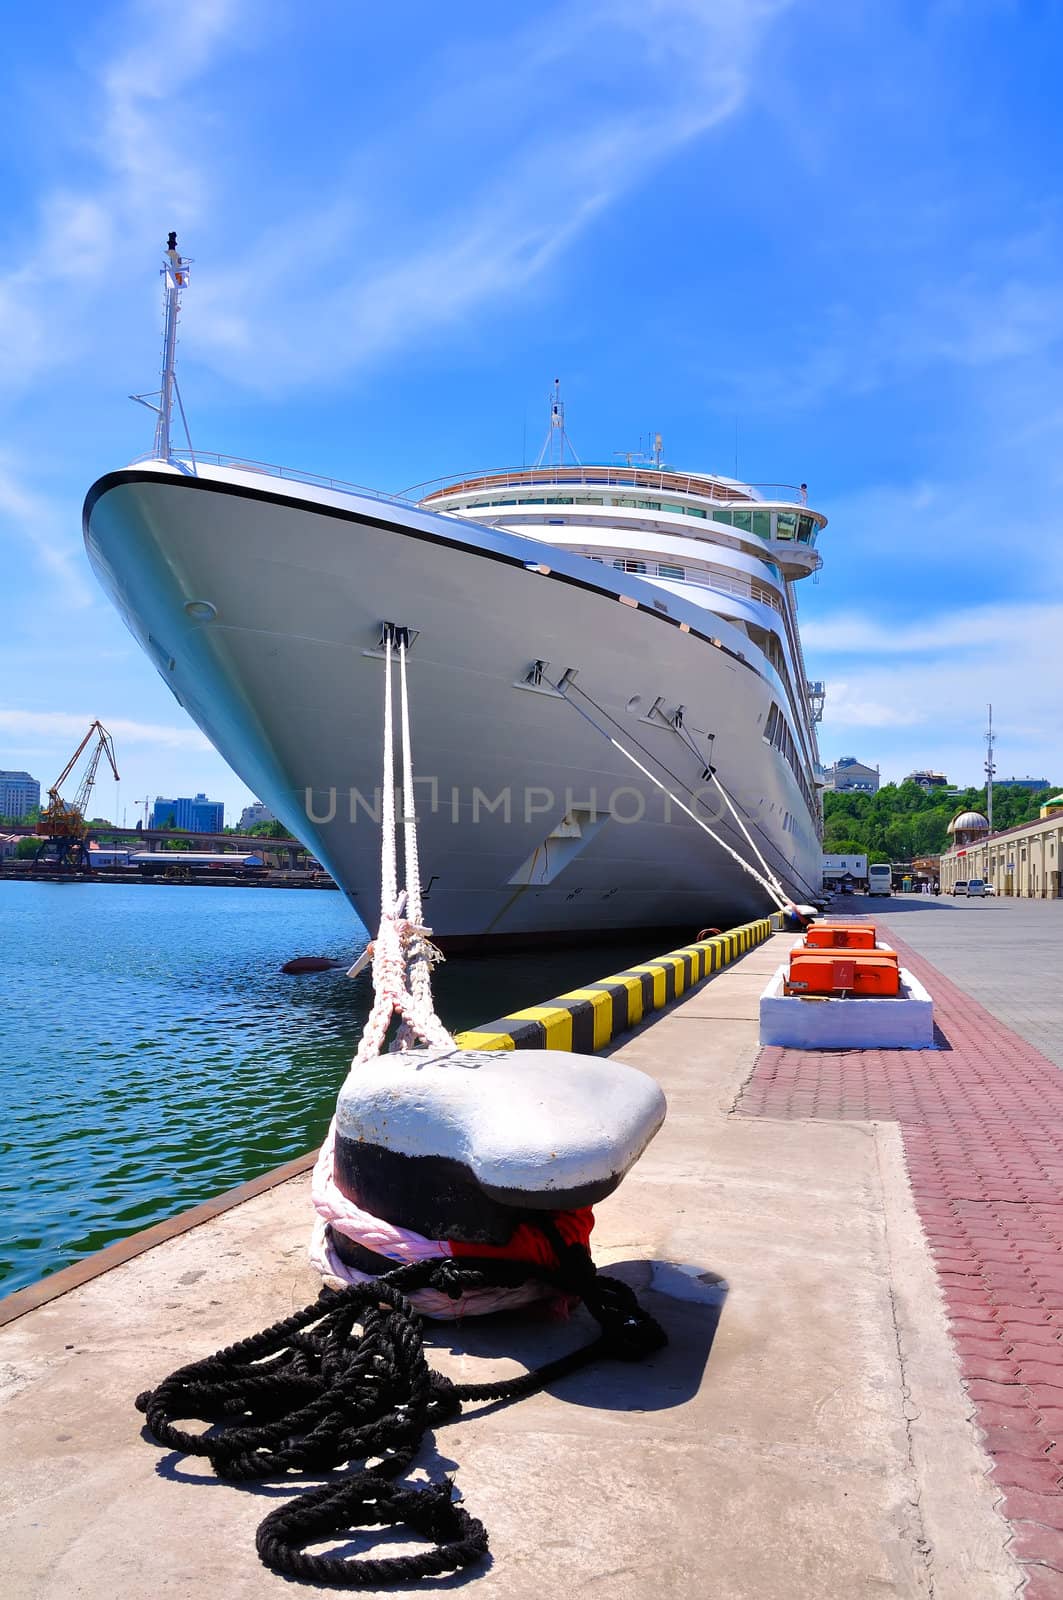 cruise liner by vetkit